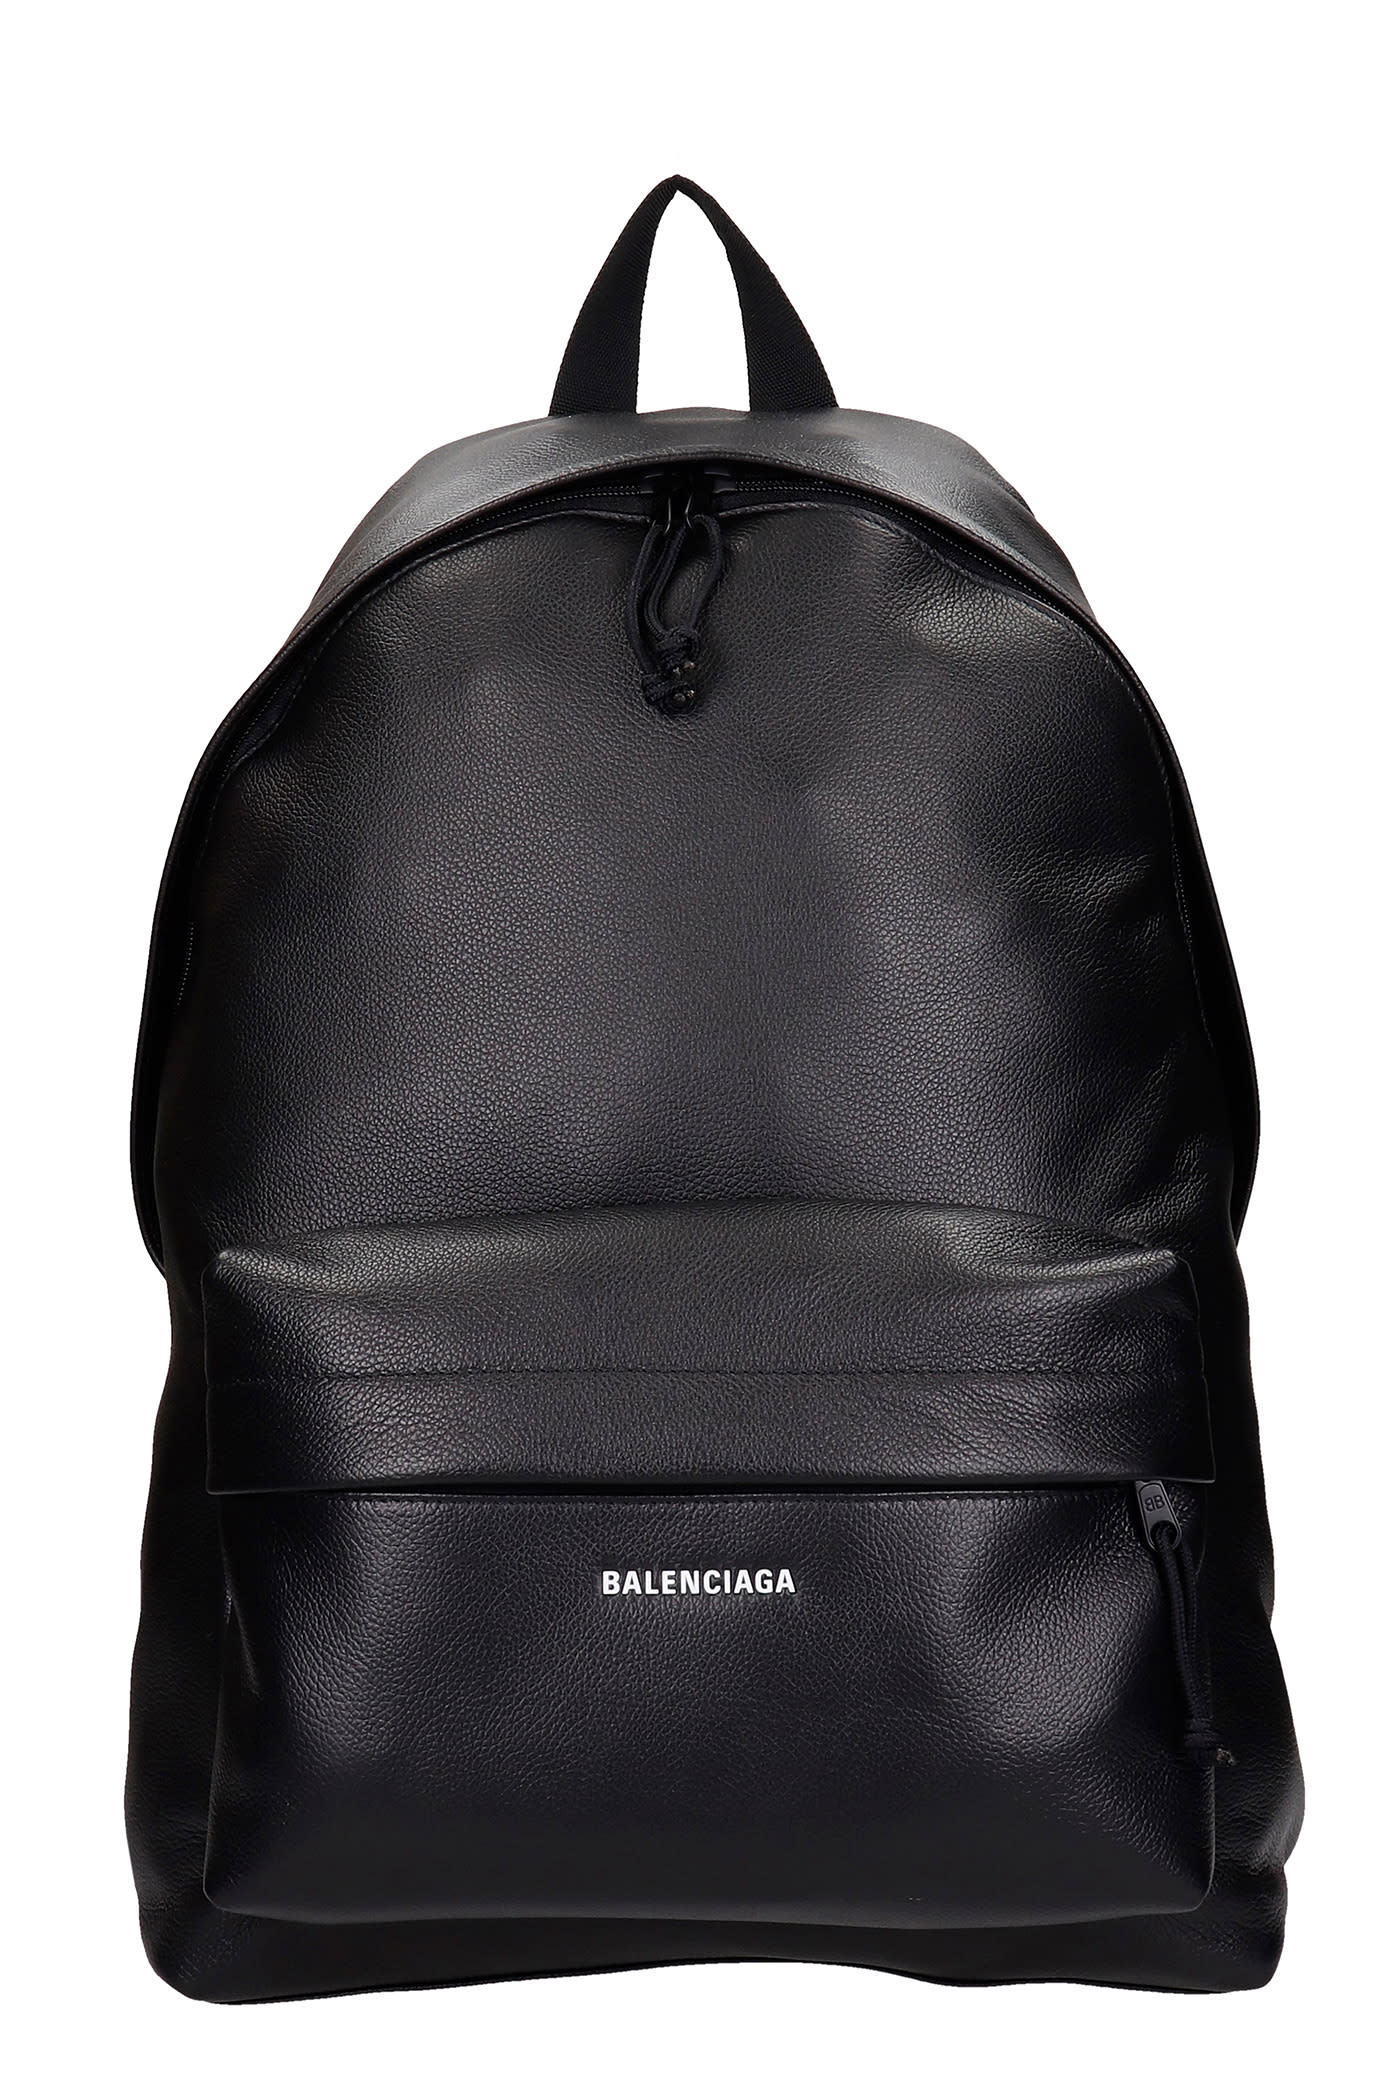 Balenciaga Backpack In Black Leather